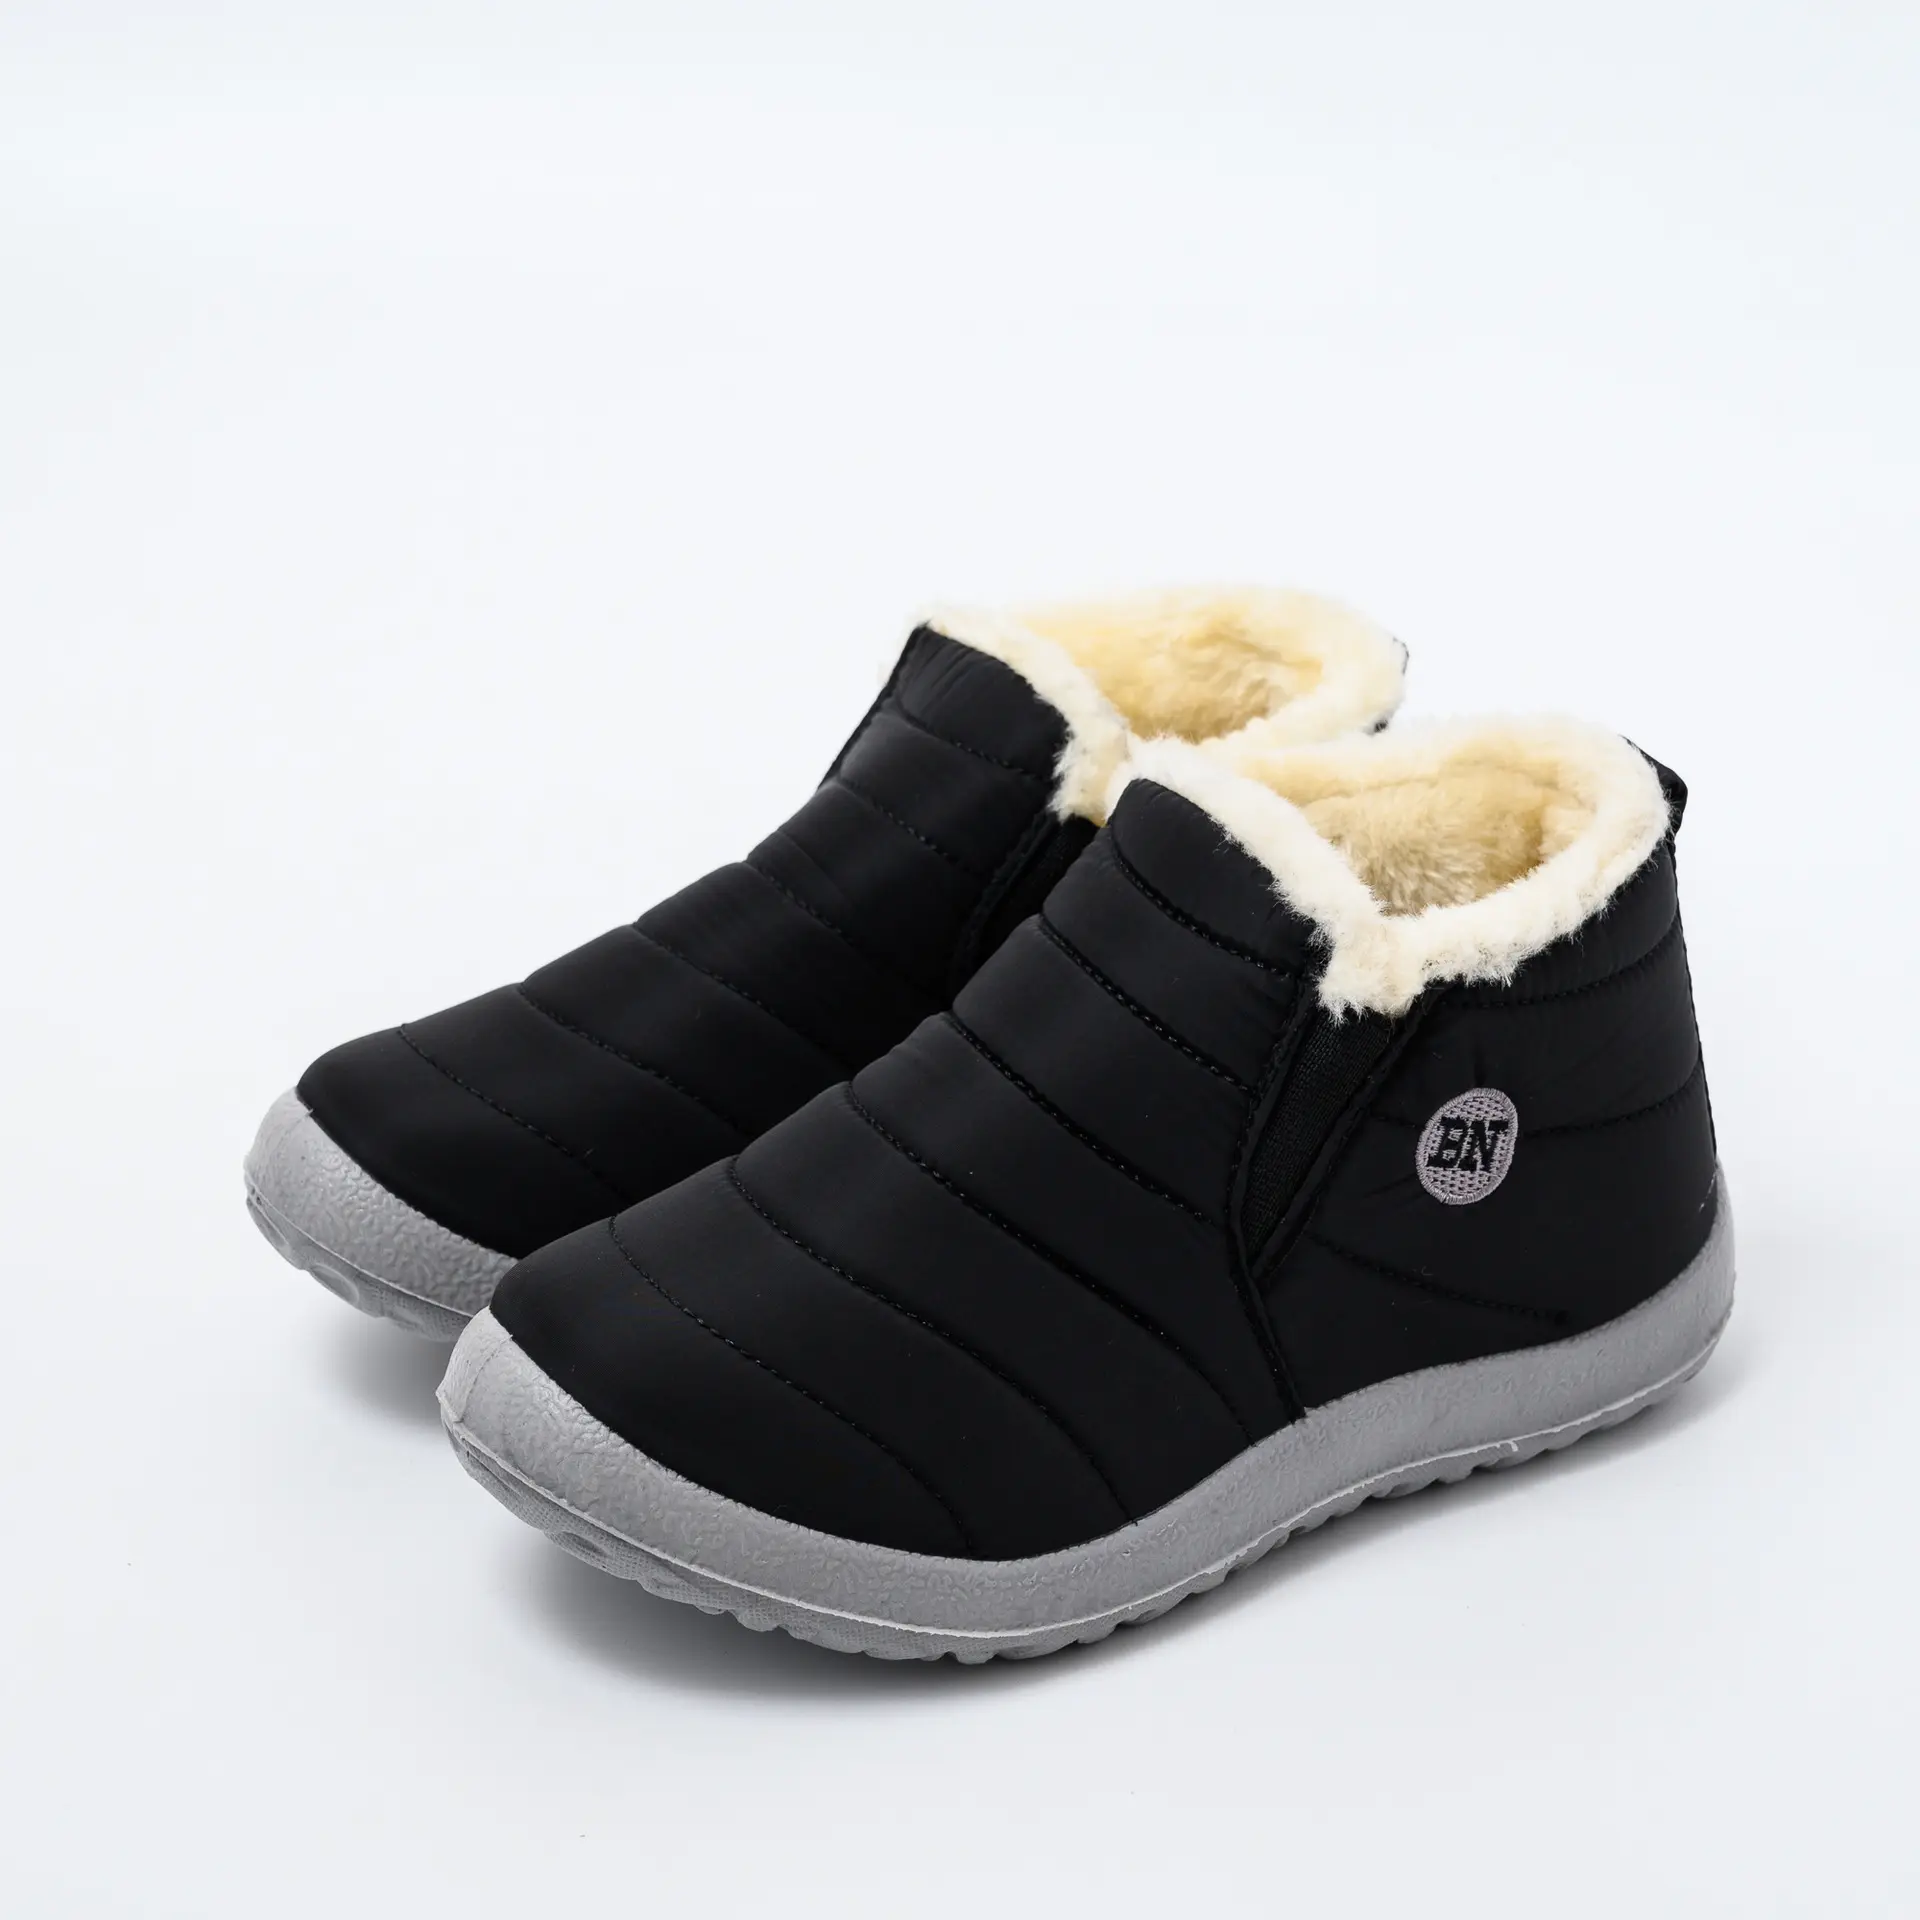 Waterproof upper lightweight cotton-Padded slip on outdoors warm walking shoes sneakers Men Winter Snow Boots Shoes